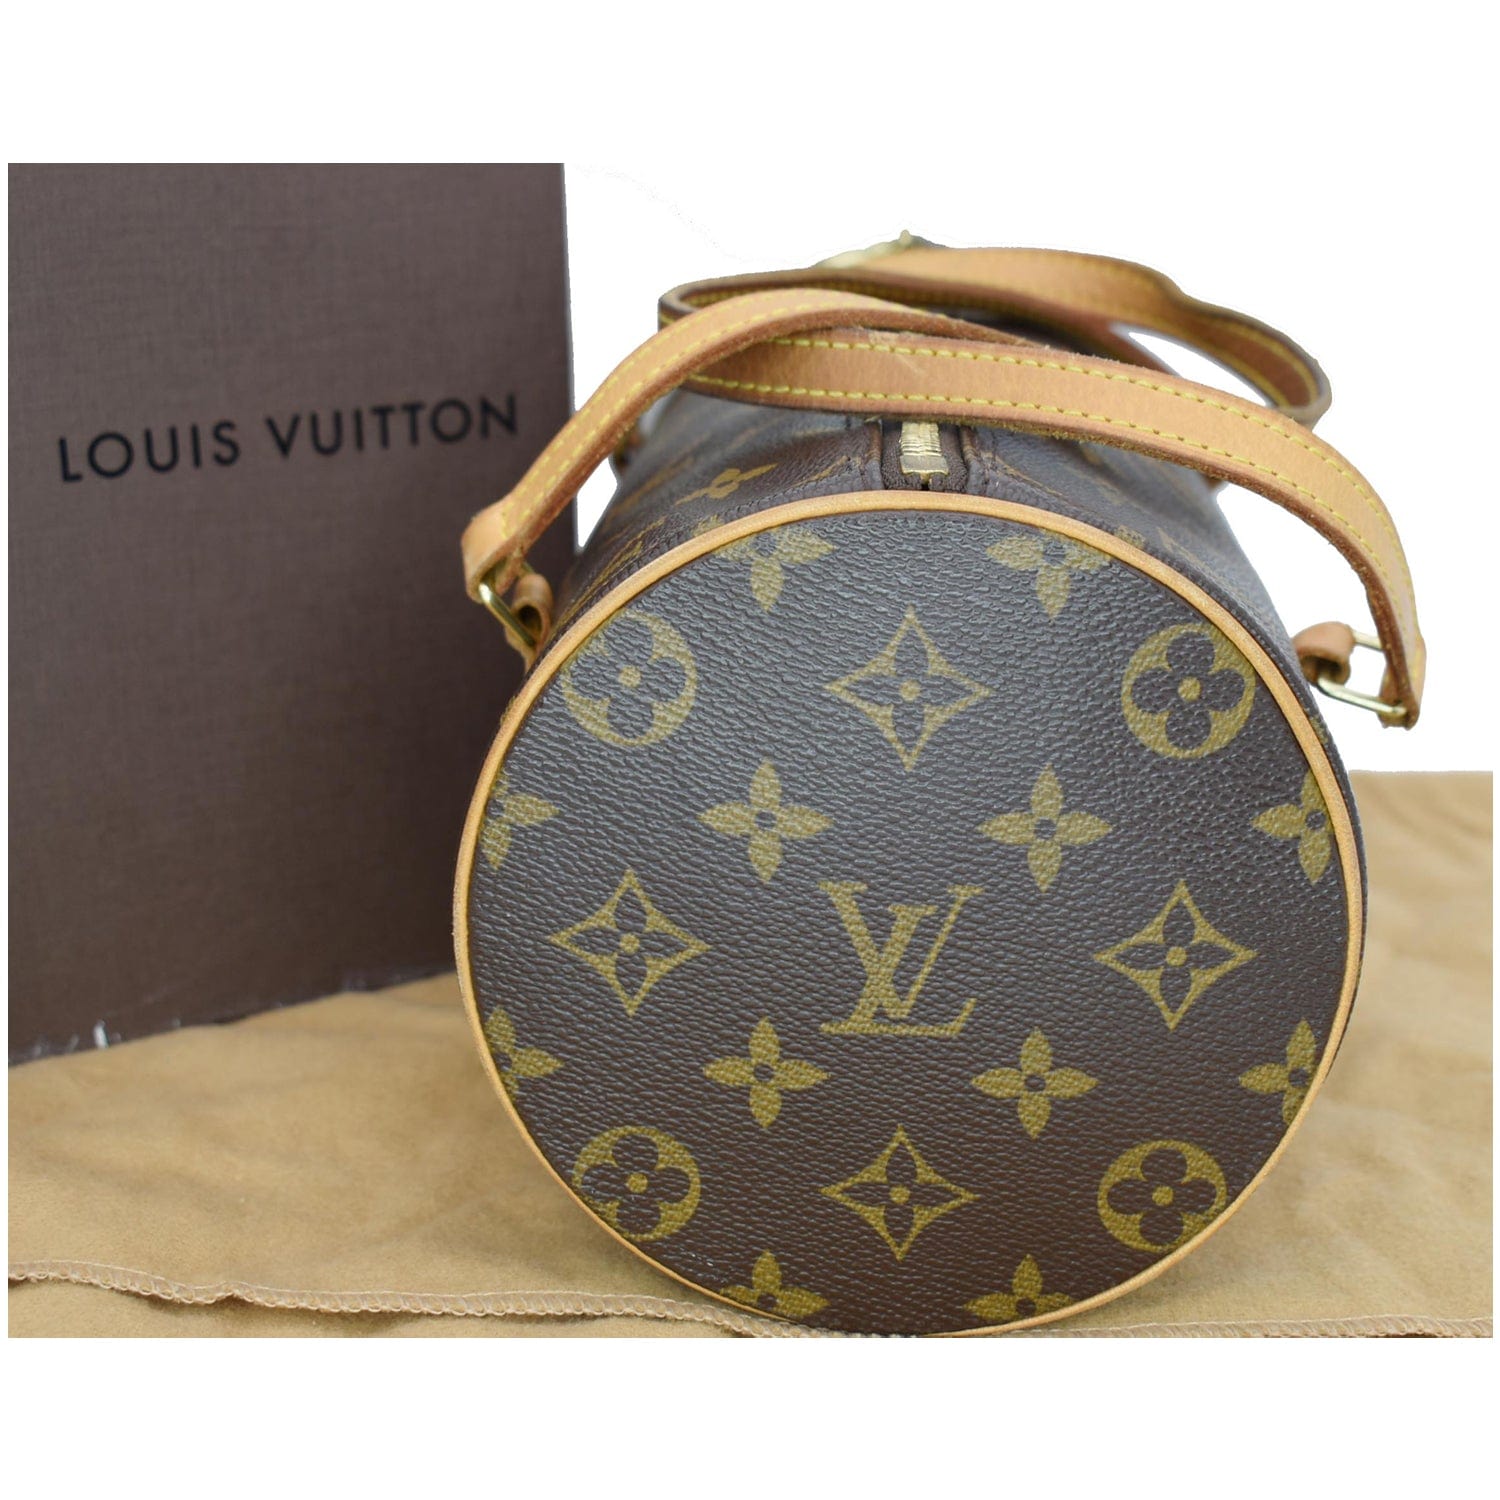 Louis Vuitton, Bags, Authentic Louis Vuitton Tootsie Roll Wdust Bag